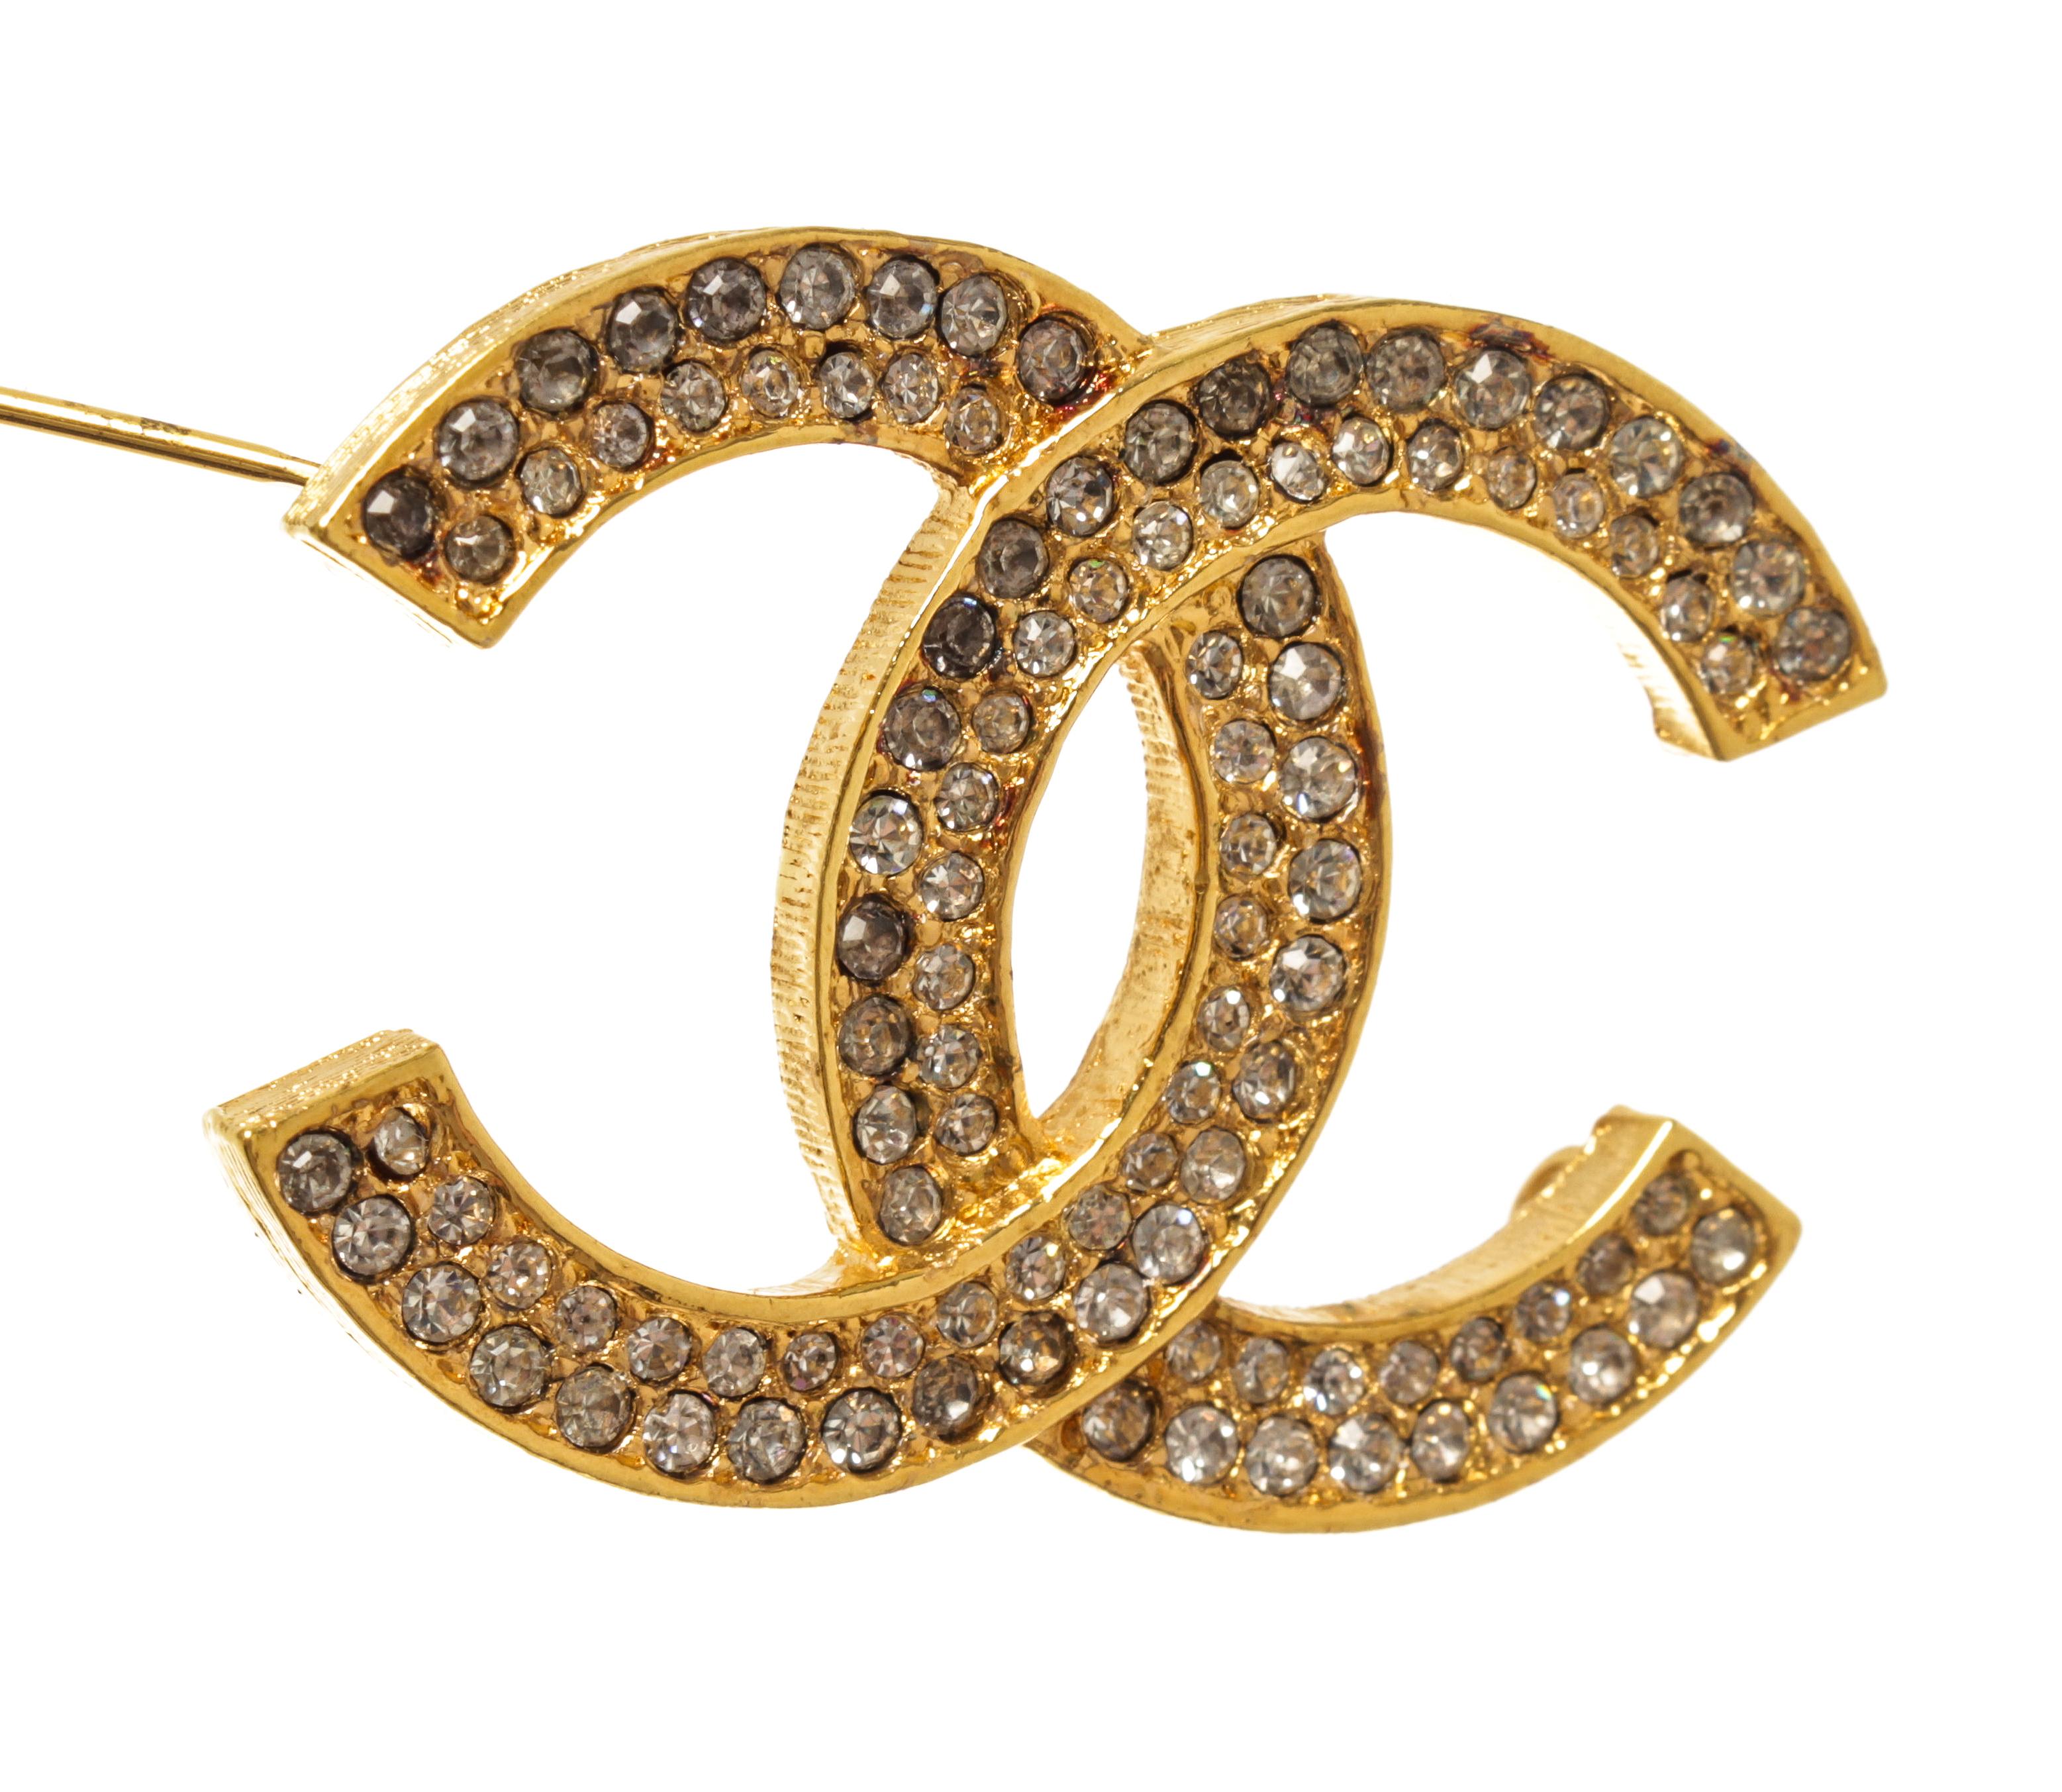 Chanel gold CC rhinestone brooch with gold-tone hardware, CC logo with rhinestones, and pin closure.

770072MSC